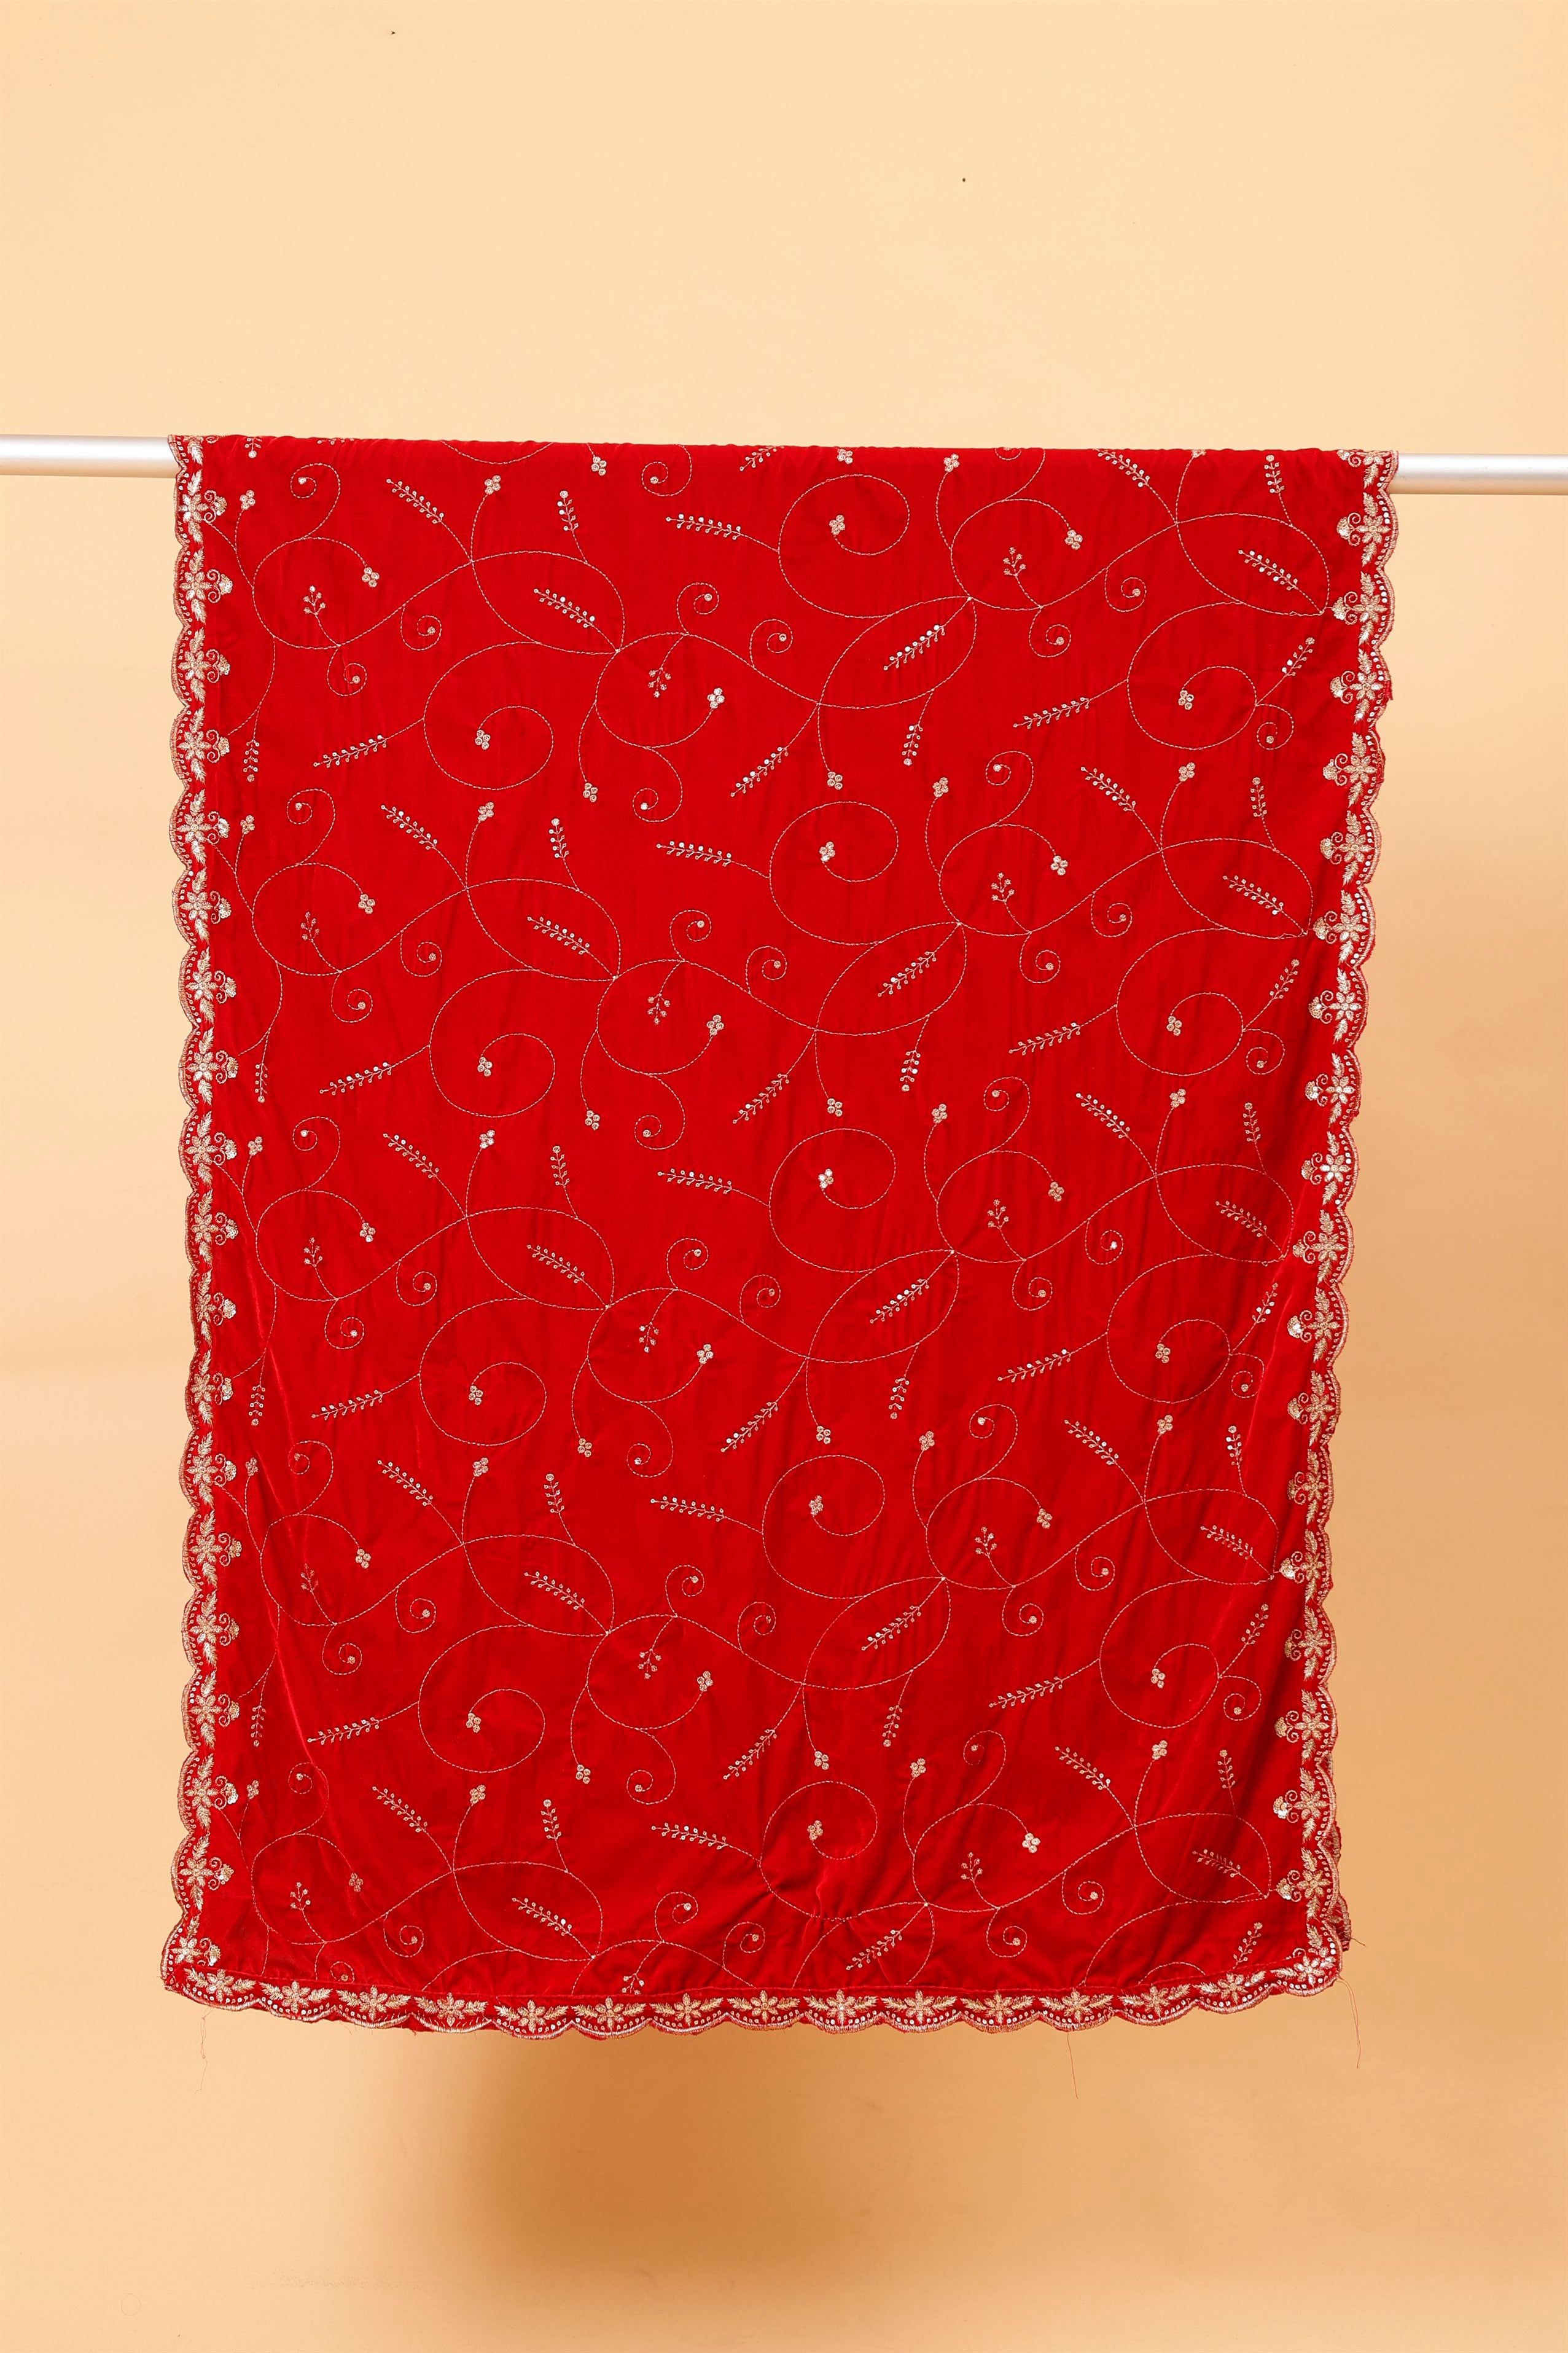 red-leaf-patern-embroiderery-velvet-dupatta-mcrcvd7443-moda-chales-6